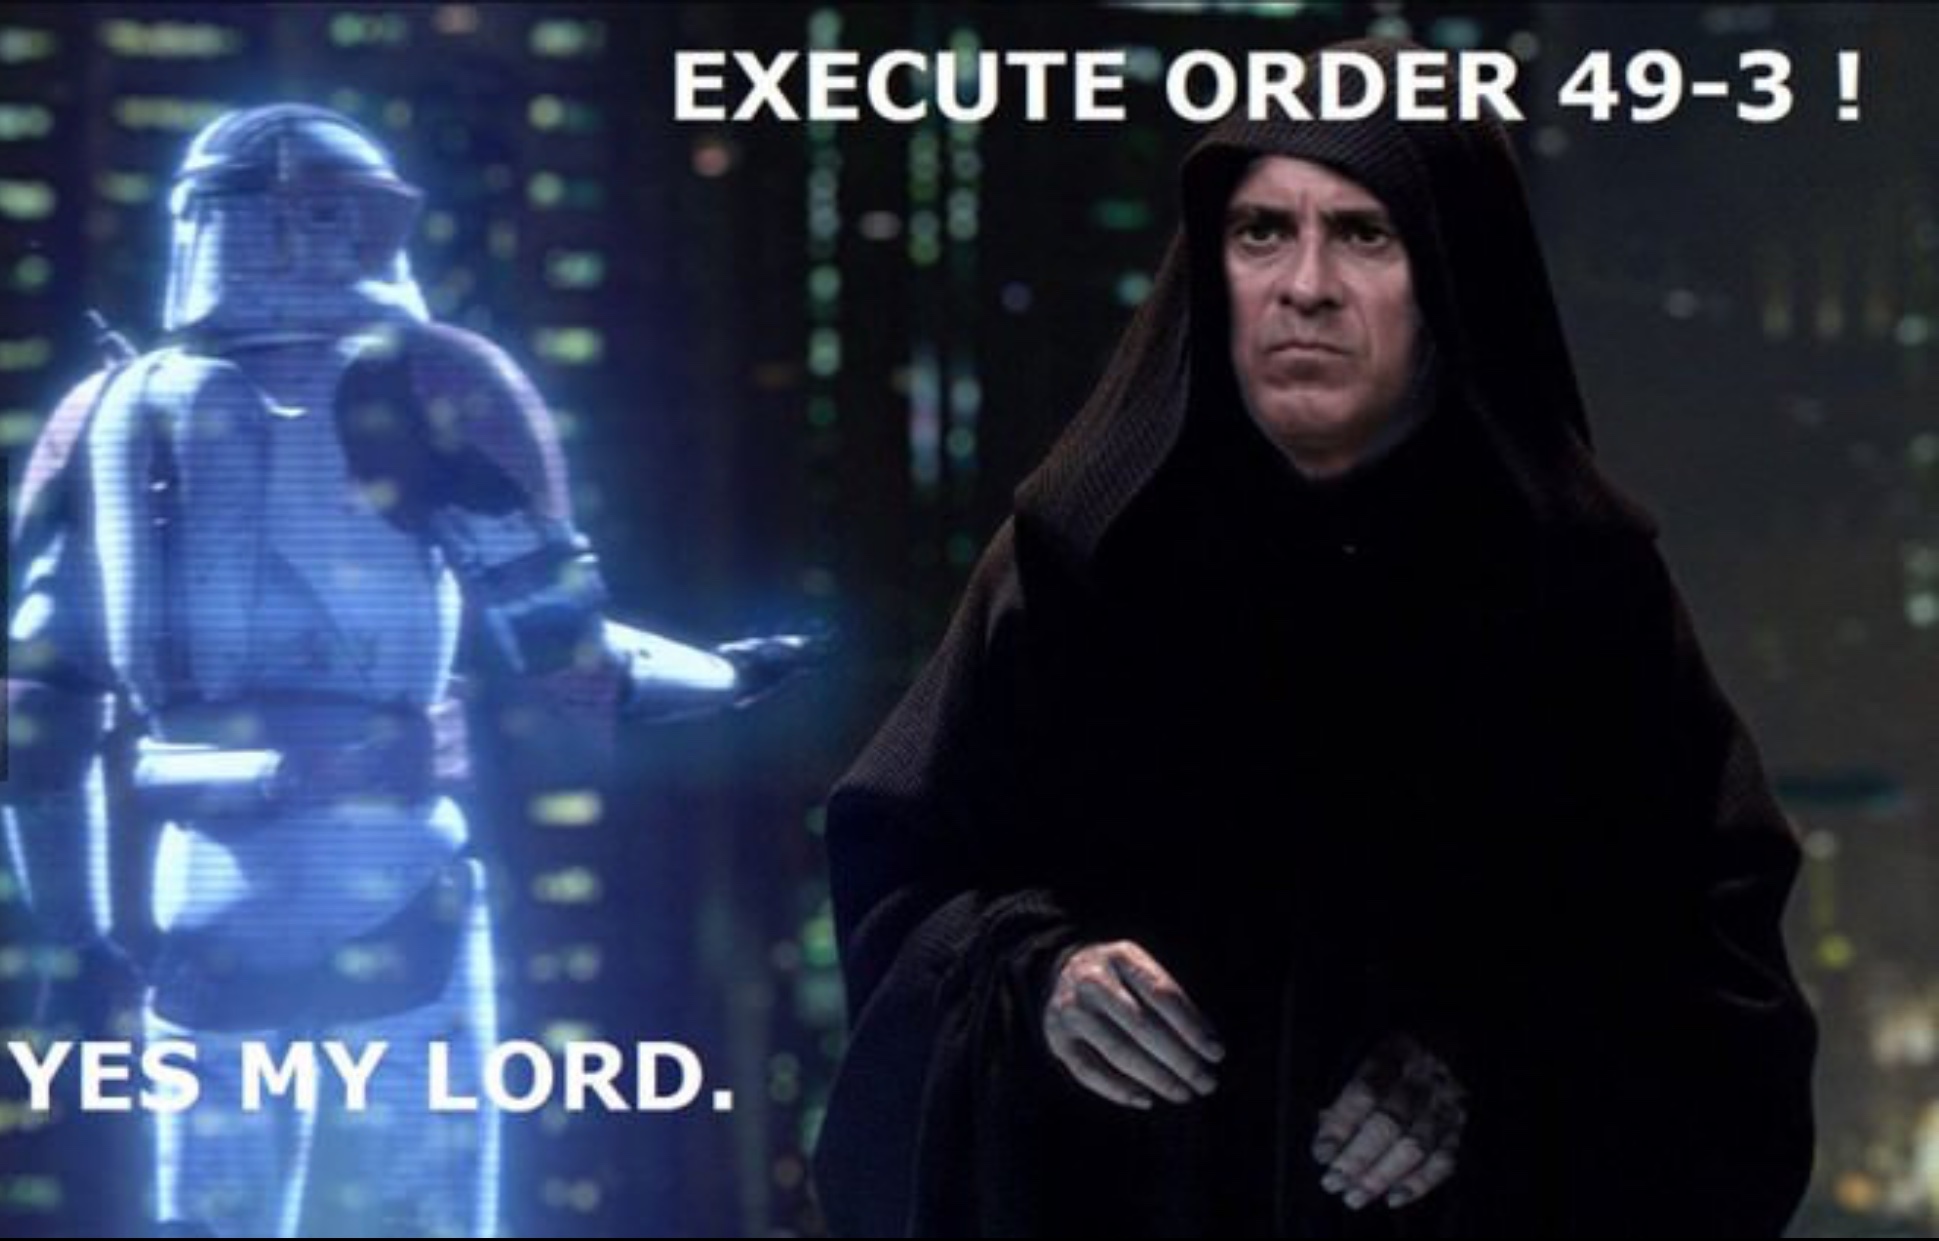 Execute order 66 - meme